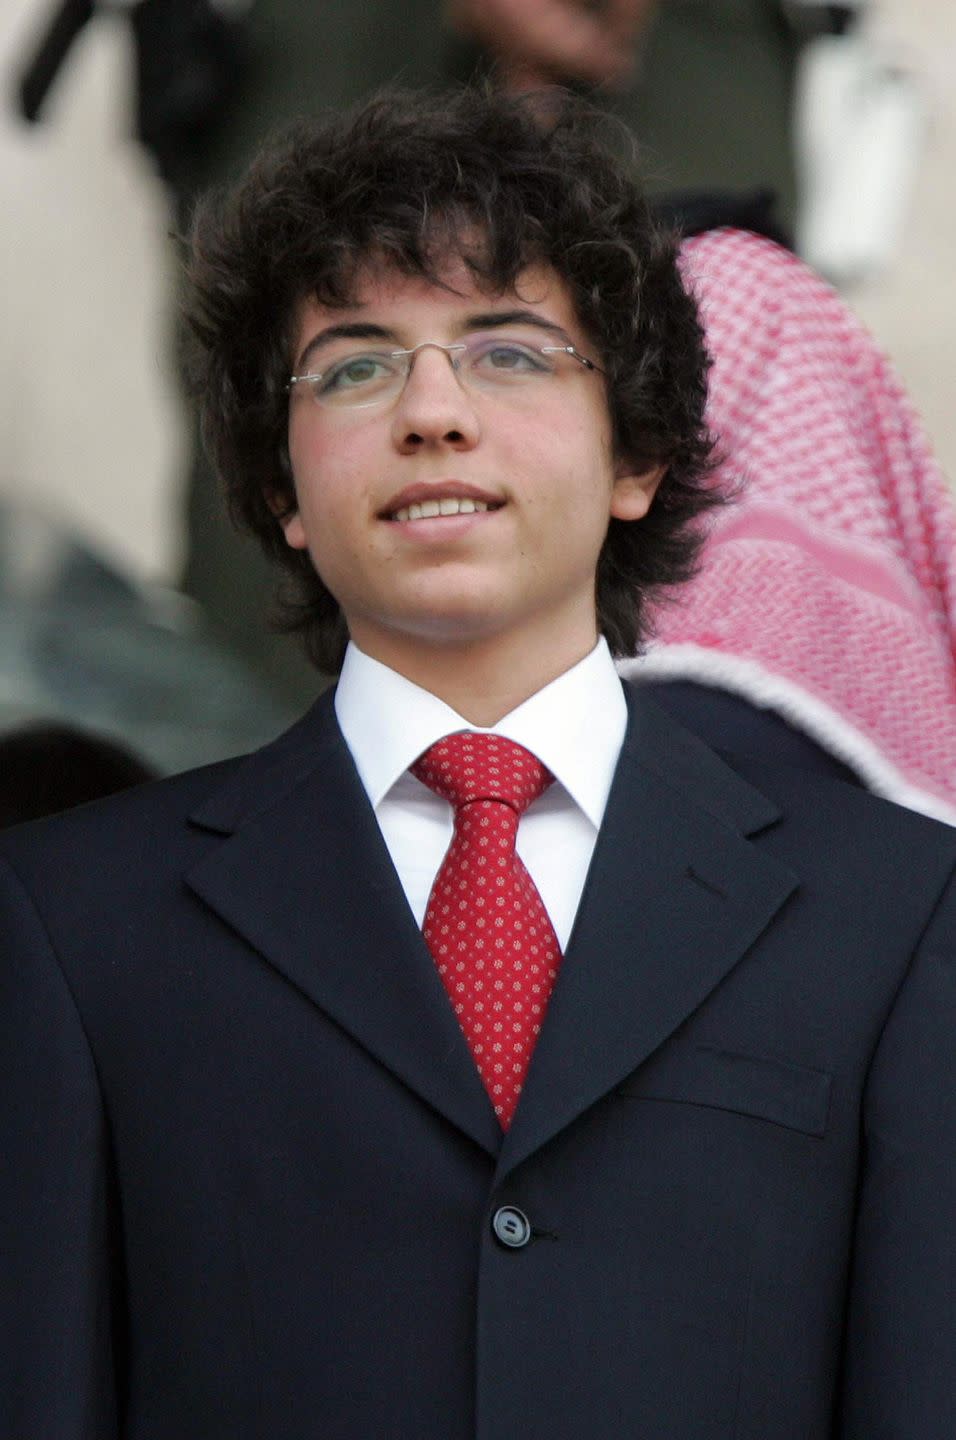 jordanian prince hussein, eldest son of